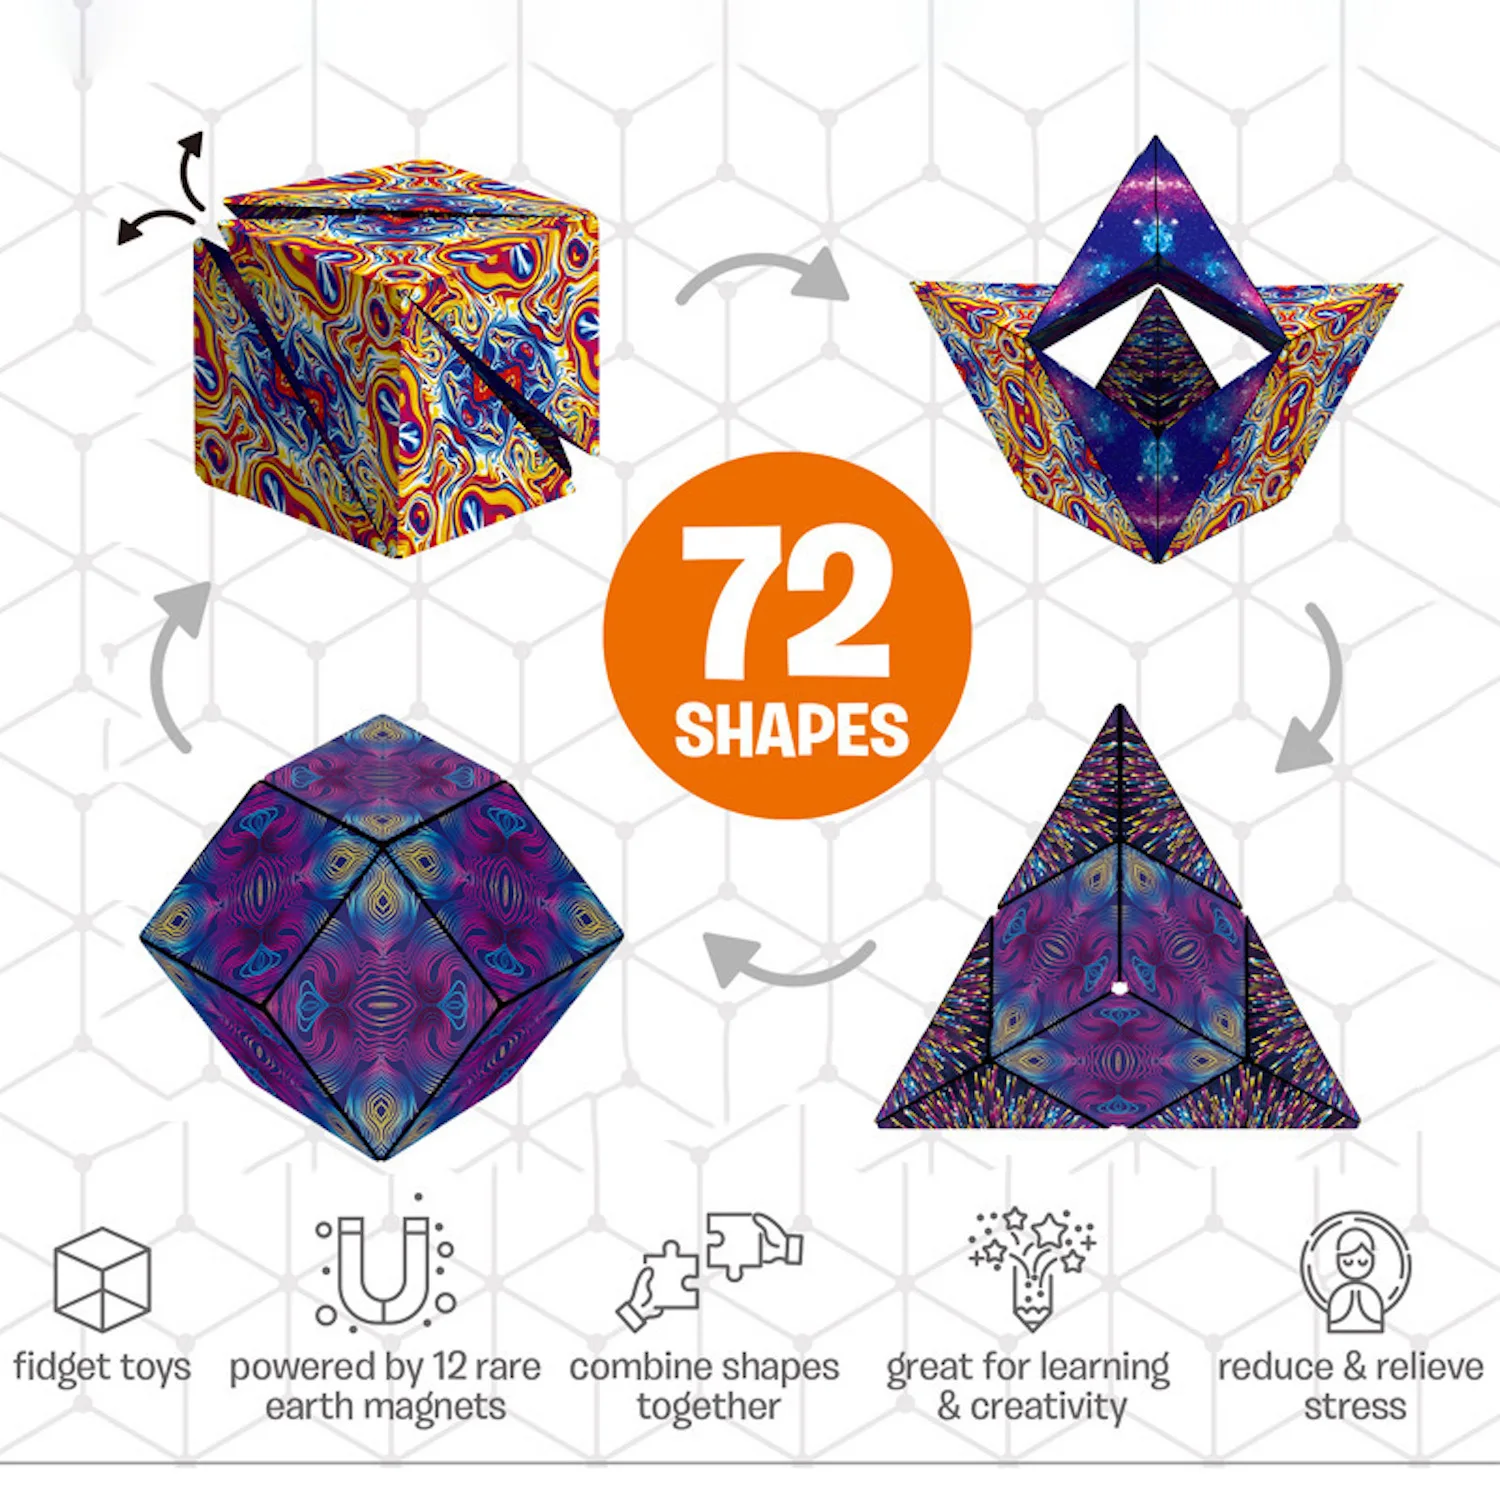 

3D Magic Cube Magnet Fidget Toy Transforms 72 Shapes Variety Rubik's Cube Magnetic Geometric Vertical Volume Block Fidget Puzzle